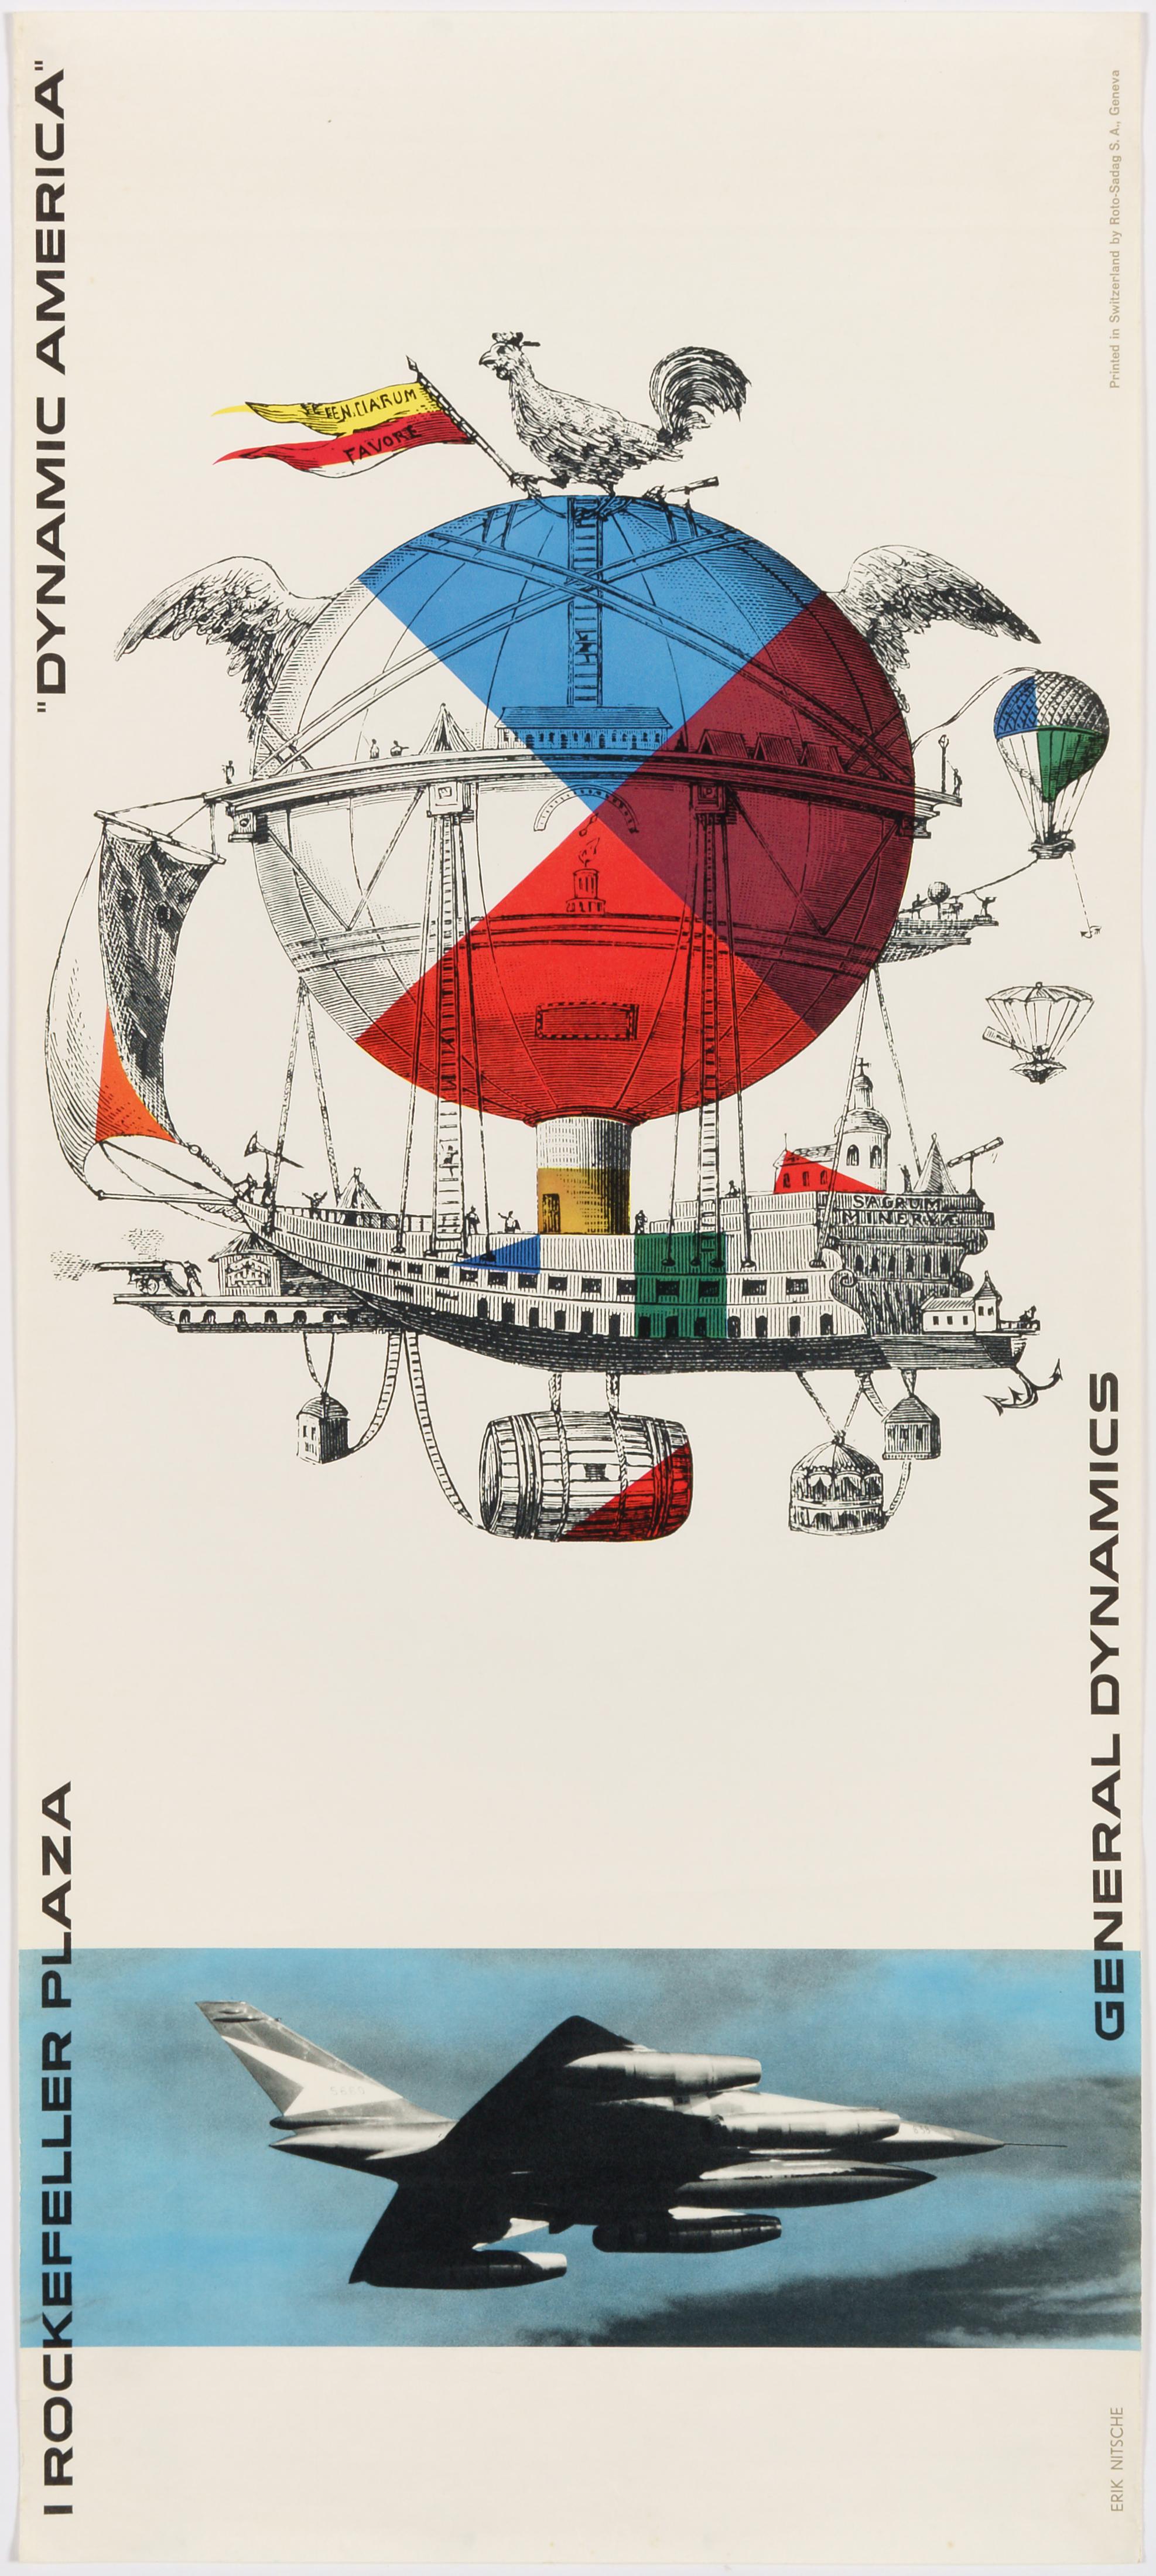 Erik Nitsche Figurative Print - General Dynamics, Exhibition at the Rockefeller Plaza – Original Vintage Poster 